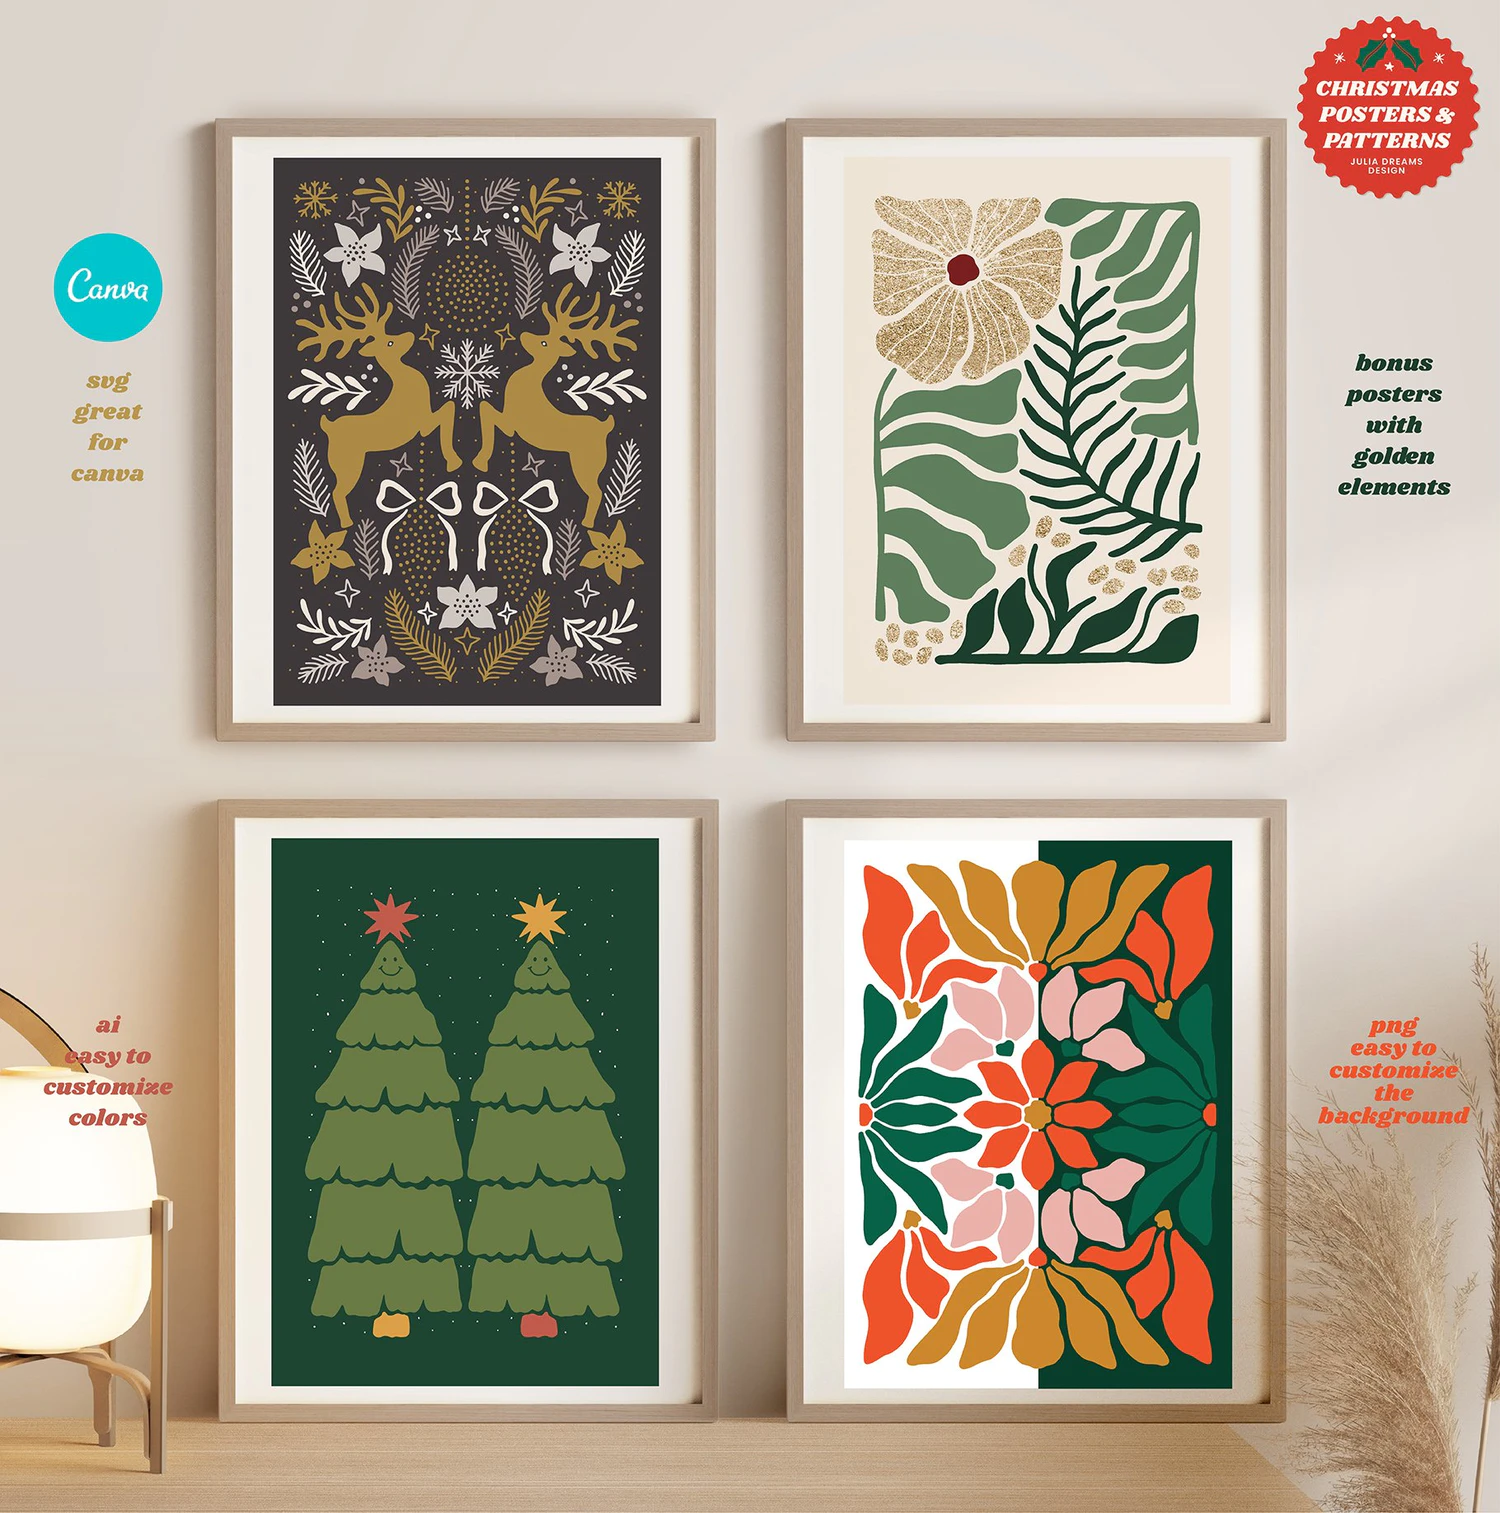 5261 70s复古元素套装圣诞节节日活动海报设计的图案元素纹理素材集合包 Christmas Posters Patterns Bundle@GOOODME.COM